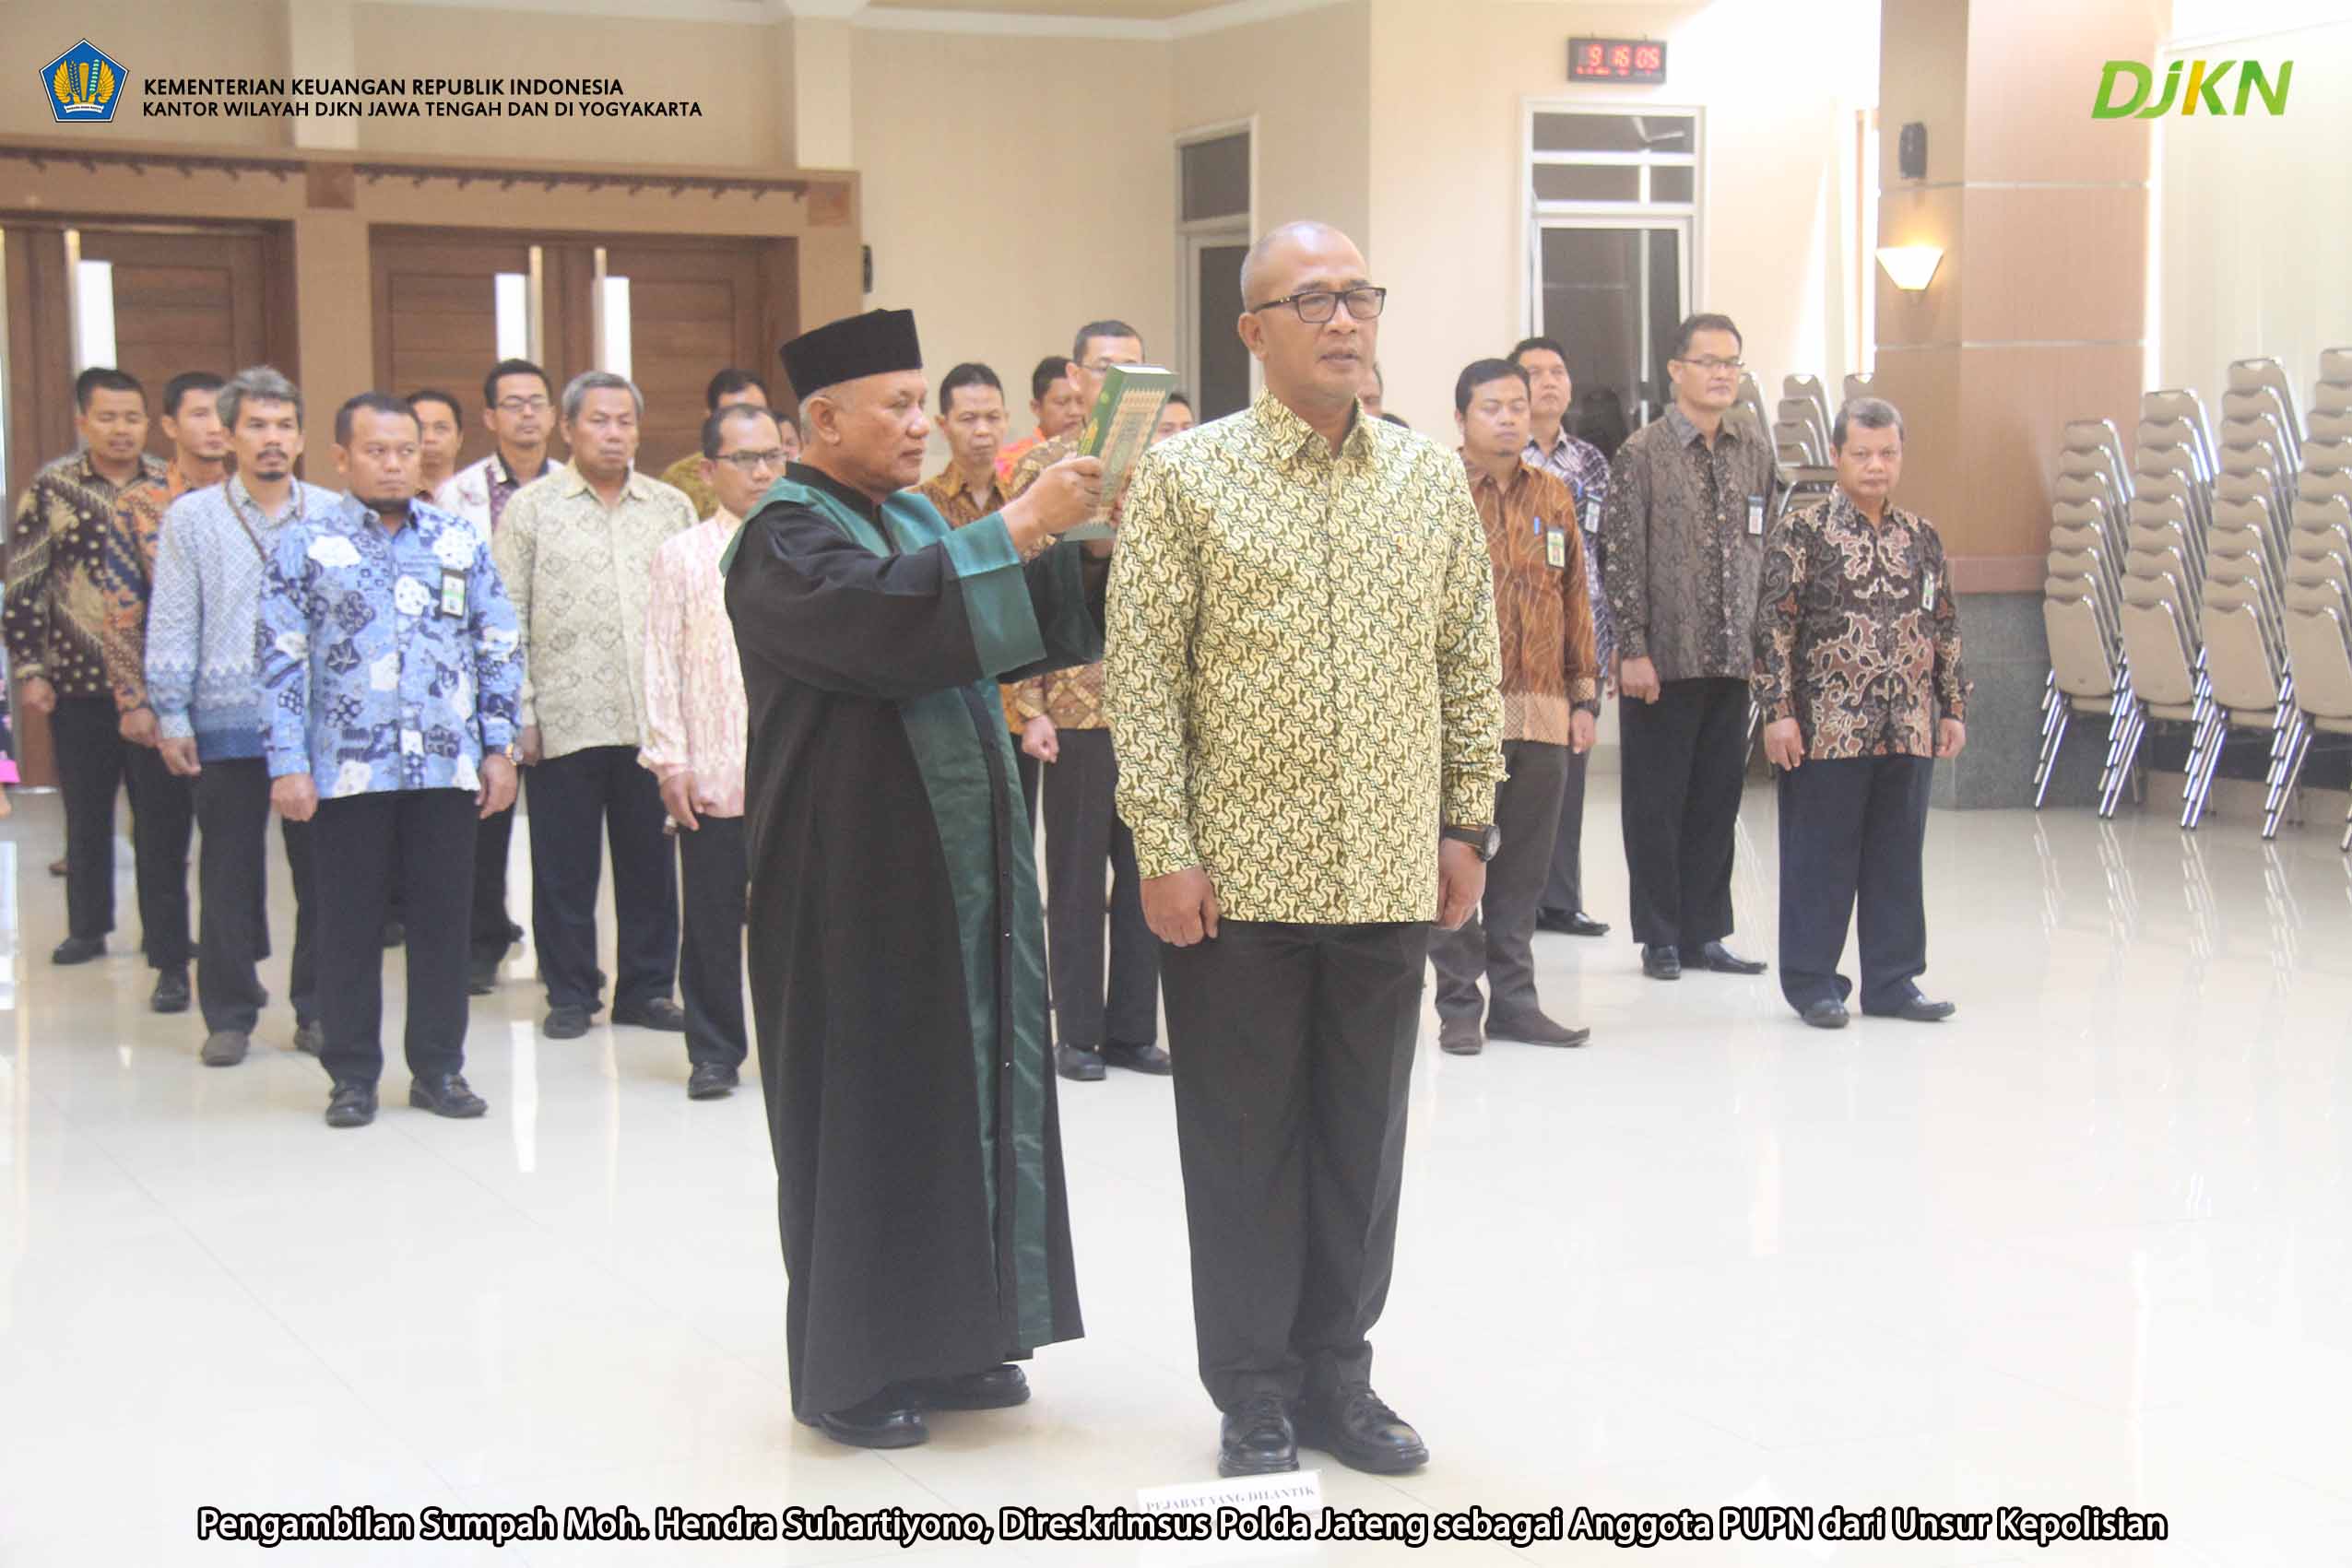 Direskrimsus Polda Jateng Resmi menjadi Anggota PUPN Jawa Tengah